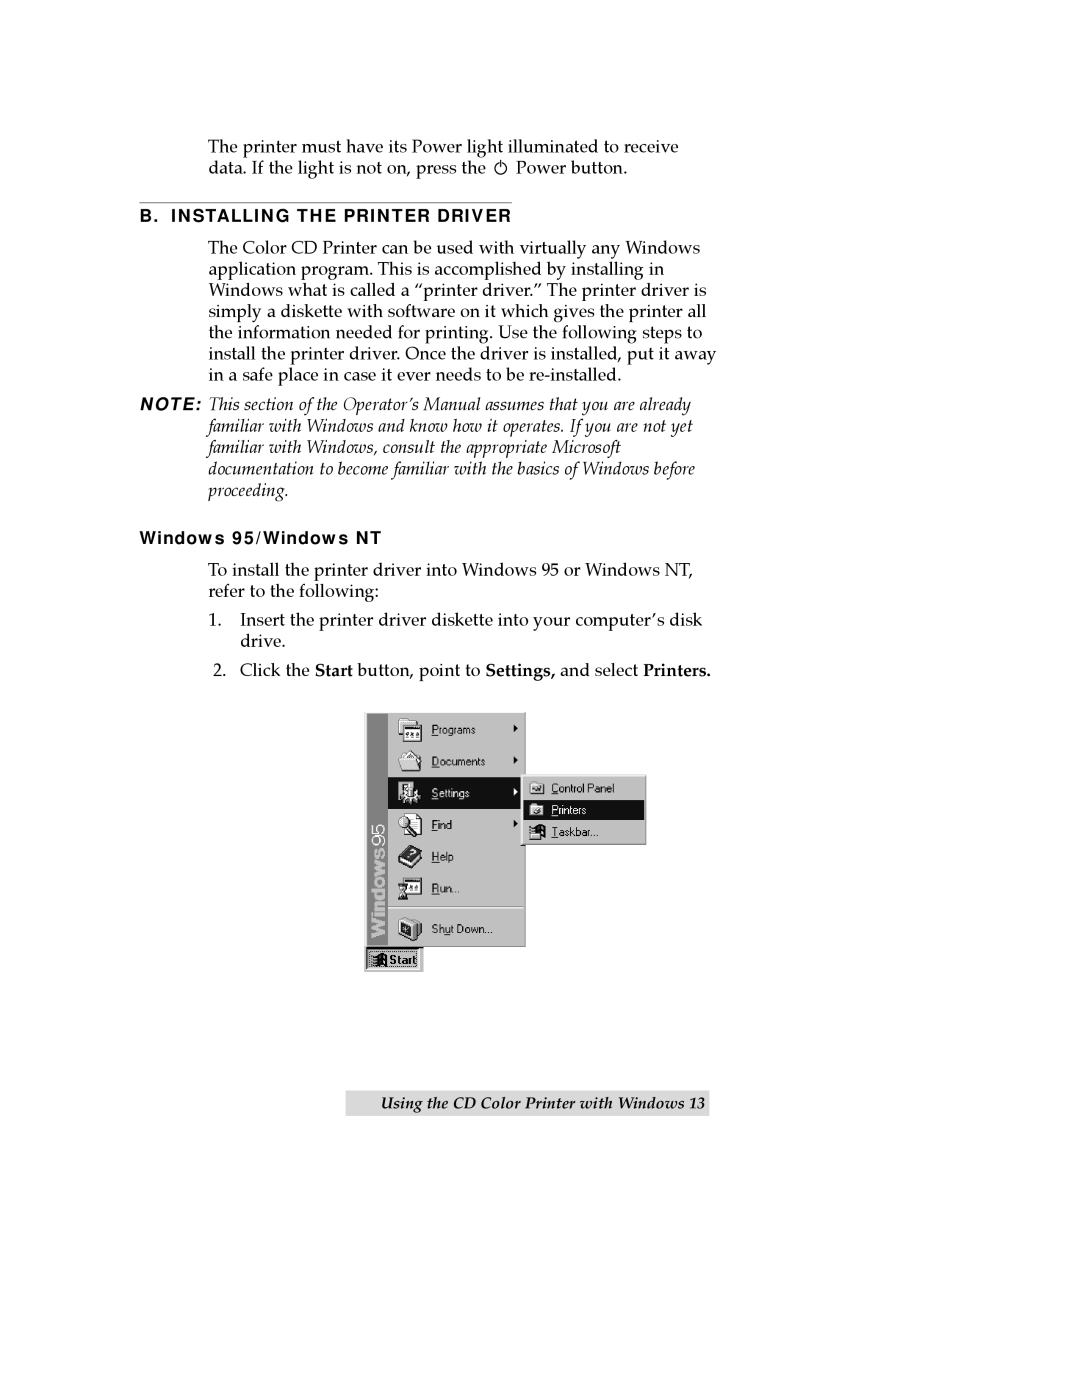 FARGO electronic CD Color Printer manual B. Installing The Printer Driver, Windows 95/Windows NT 